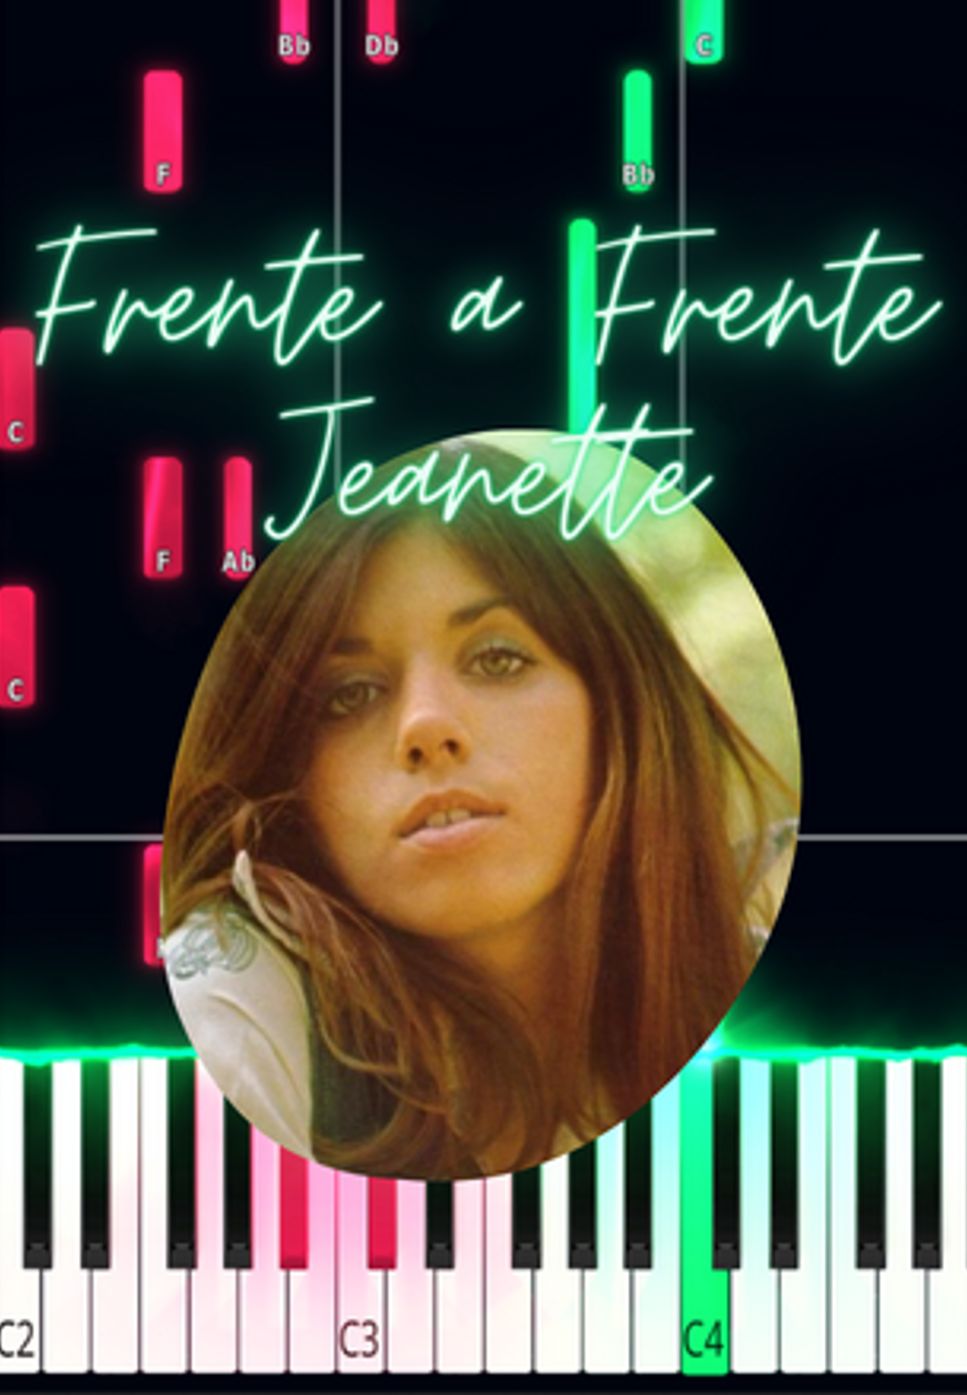 Jeanette - Frente a Frente by Marco D.